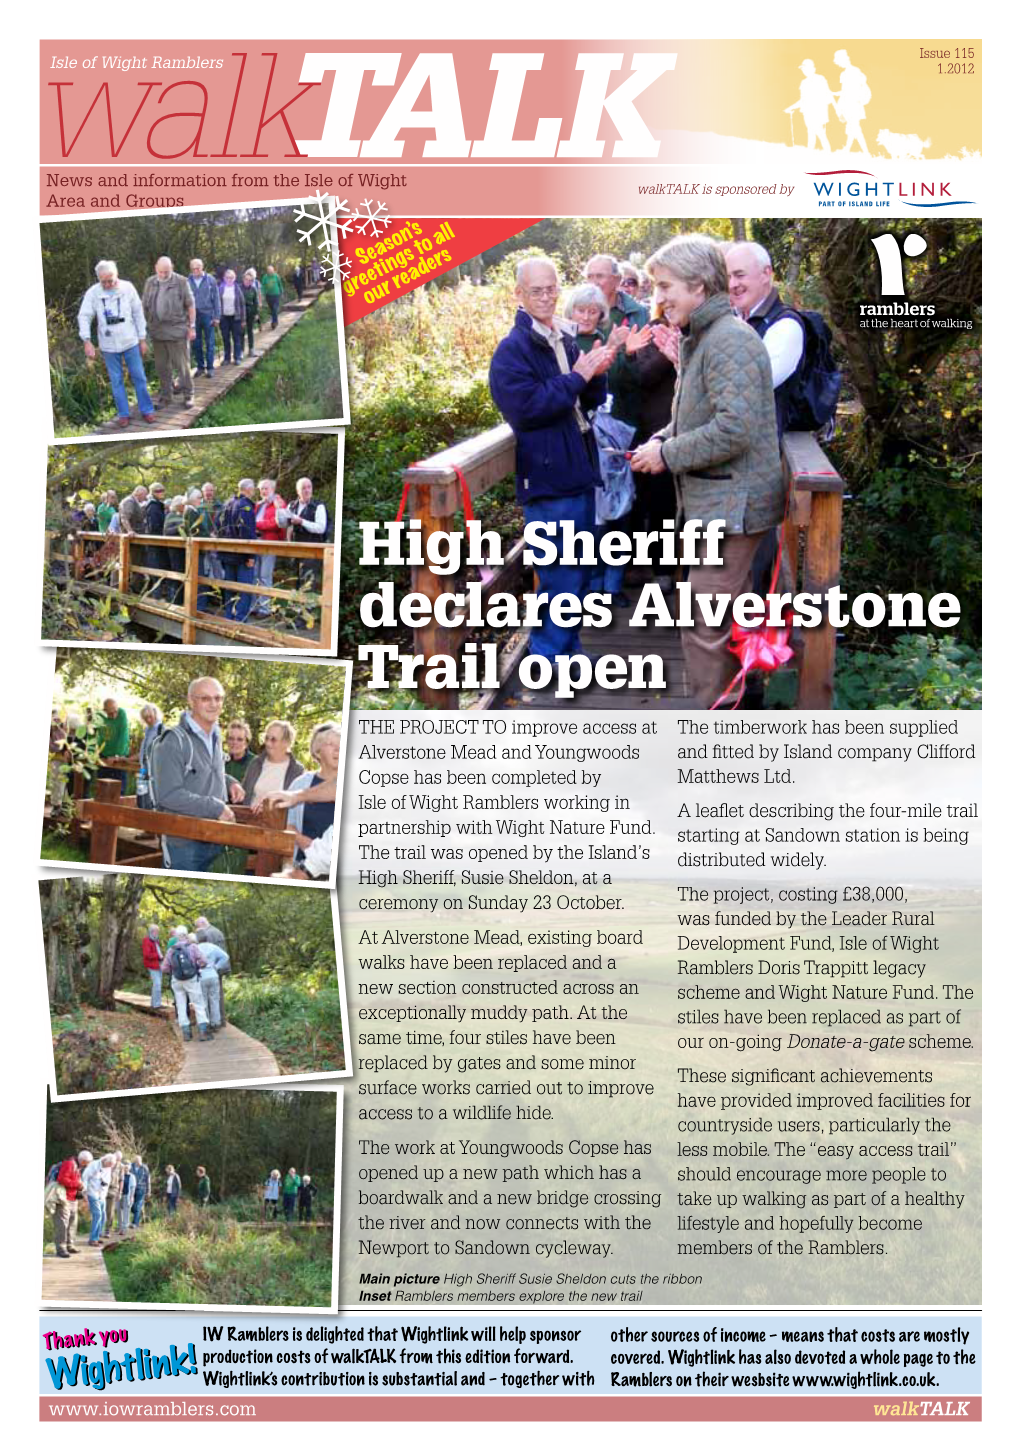 High Sheriff Declares Alverstone Trail Open